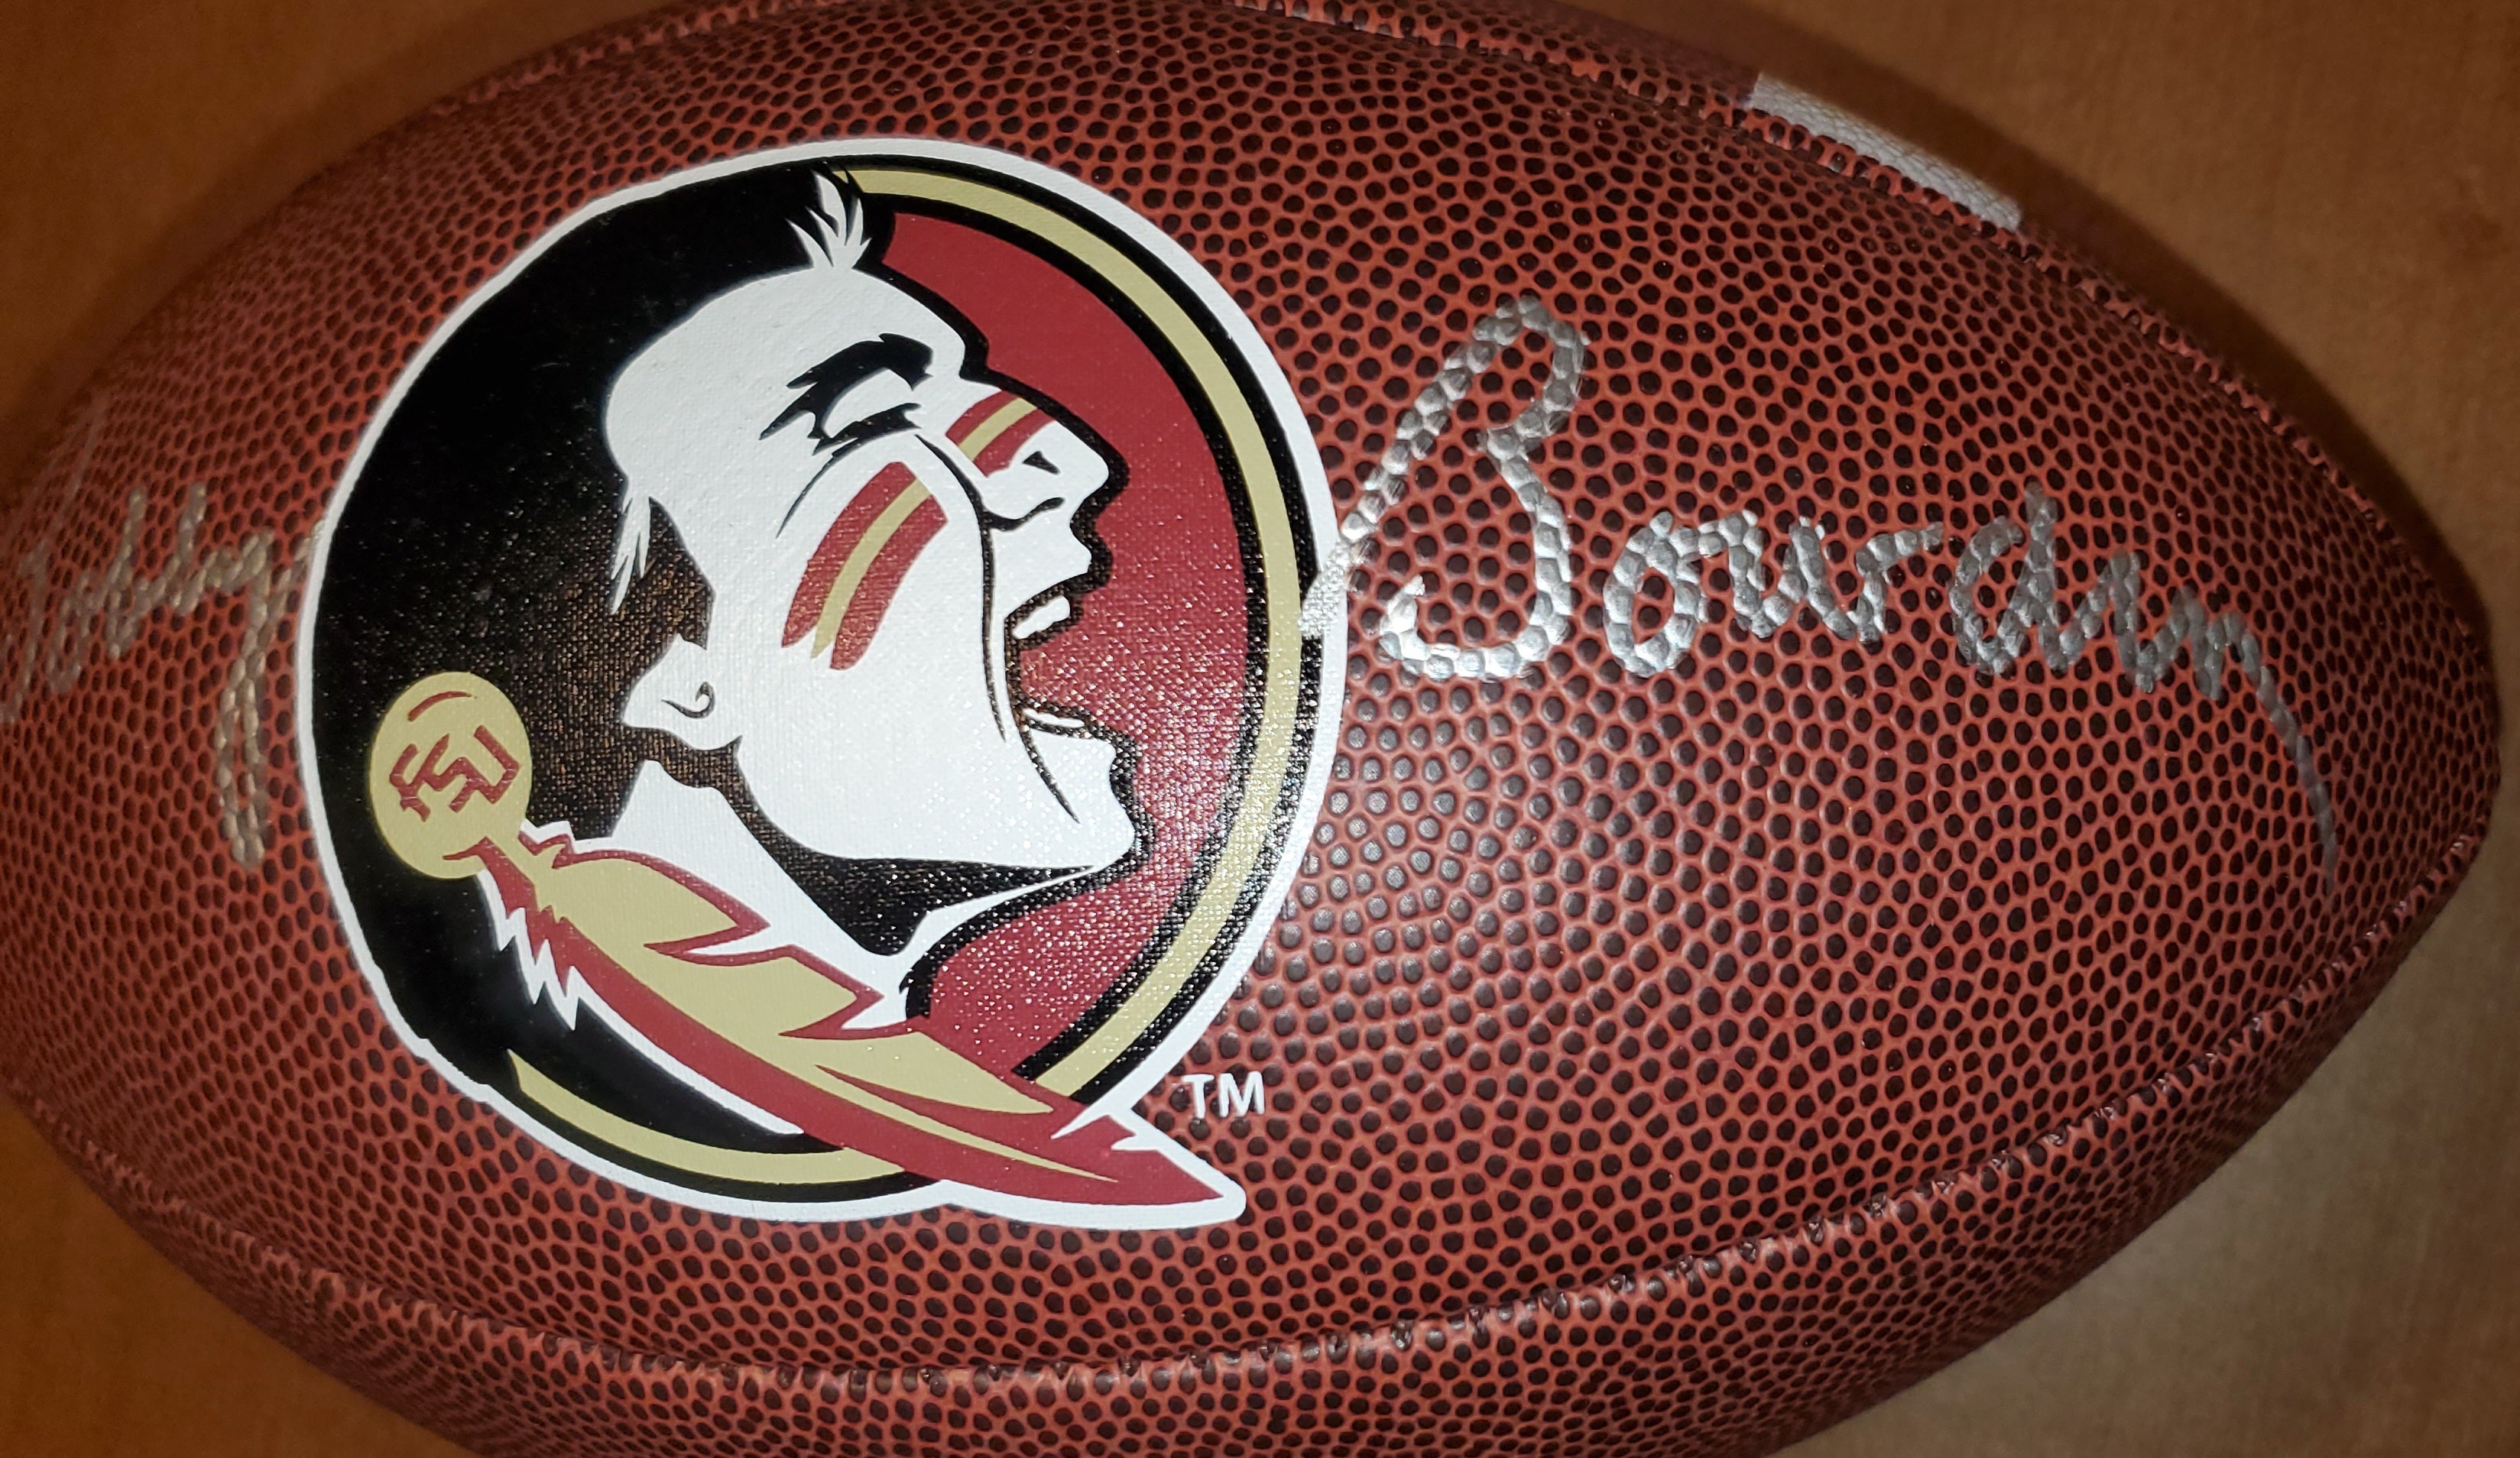 Florida State Bobby Bowden Autographed Logo Football (JSA)